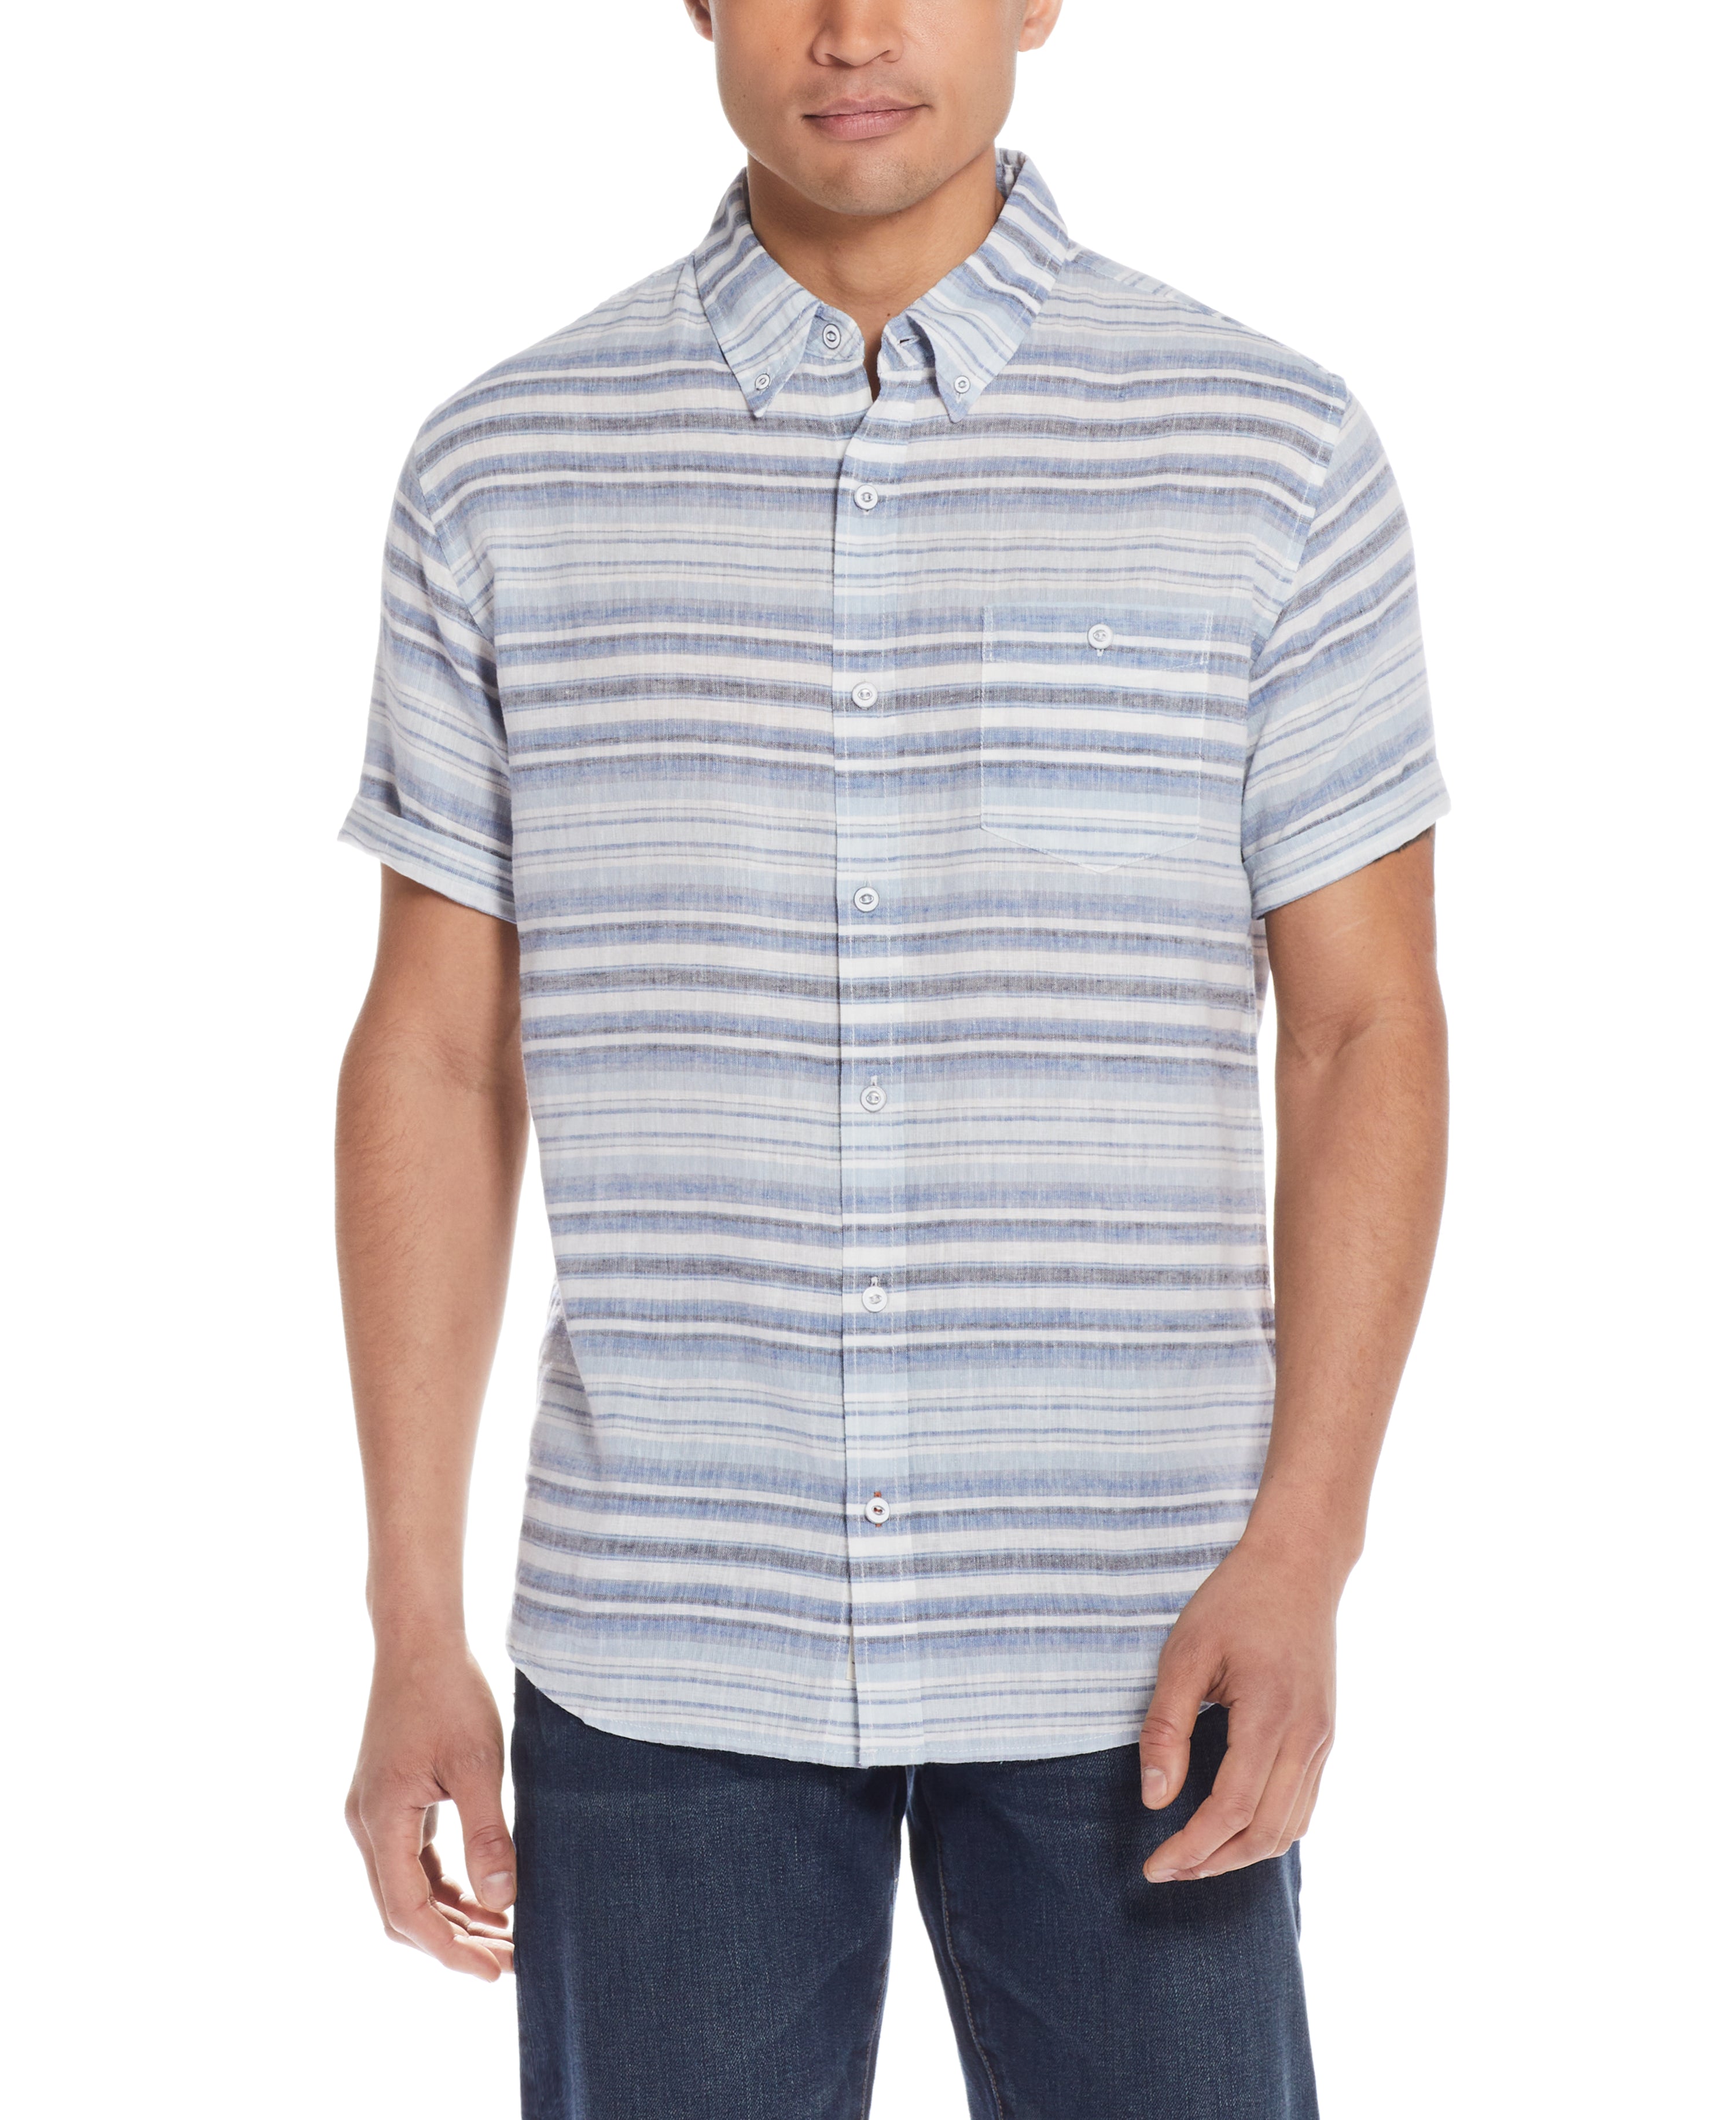 Stripe Linen Cotton Shirt in Riverside